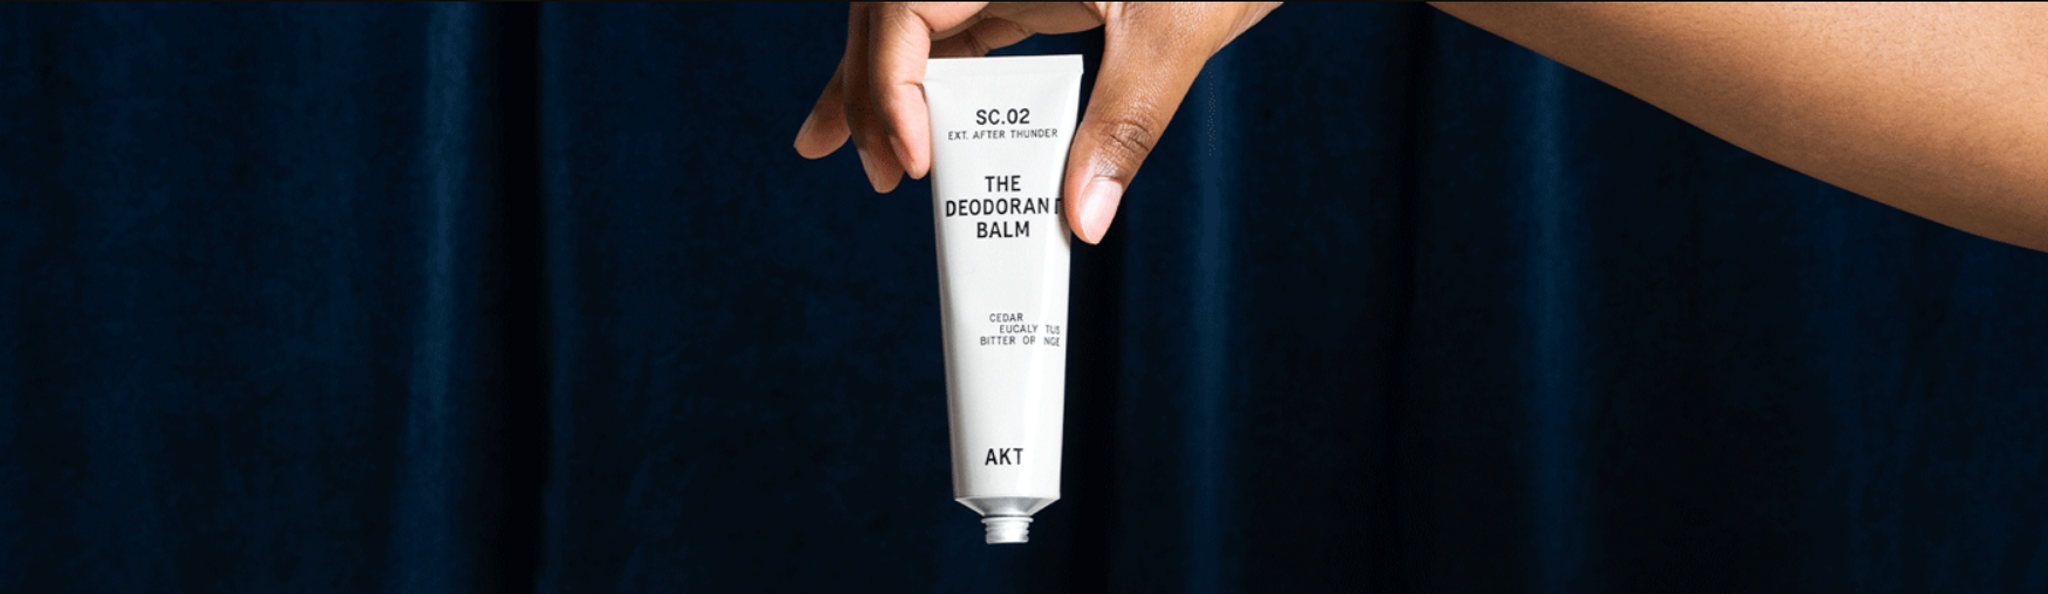 Akt: deodorant balm for high-performance sweating